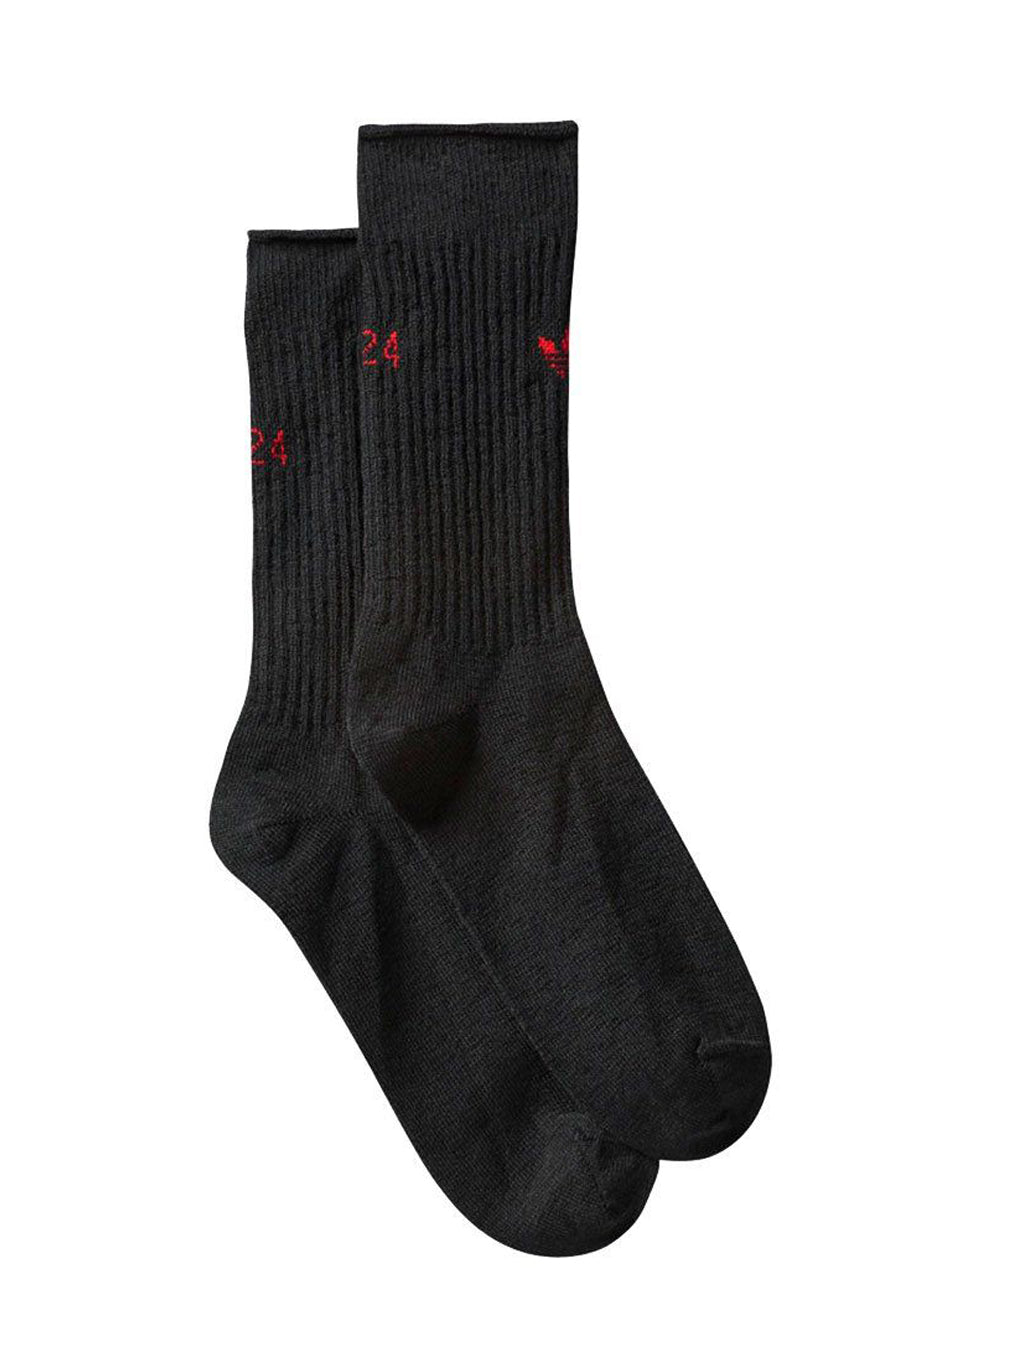 Black & Red Heavyweight Socks